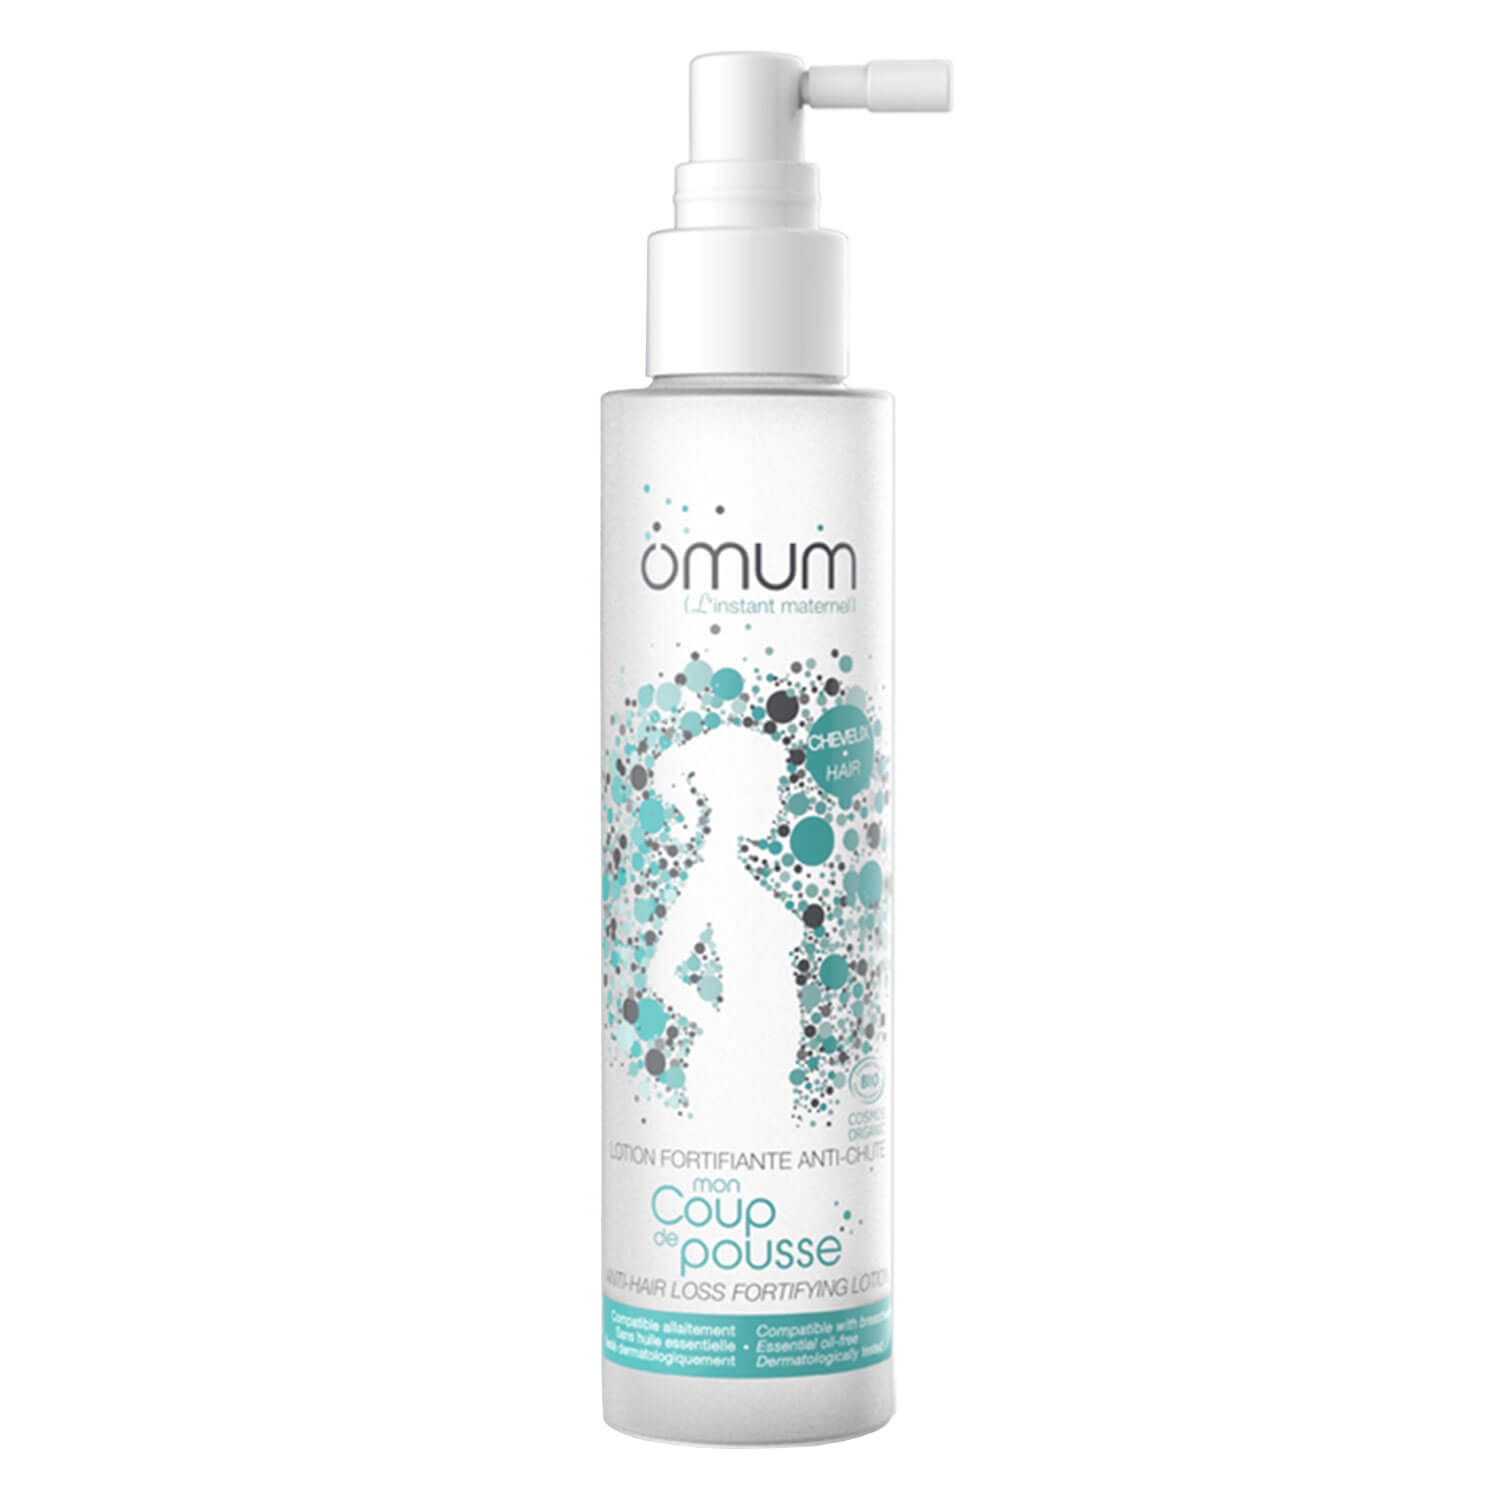 Produktbild von omum - Mon Coup de Pousse Anti-Hair Loss Fortifying Lotion